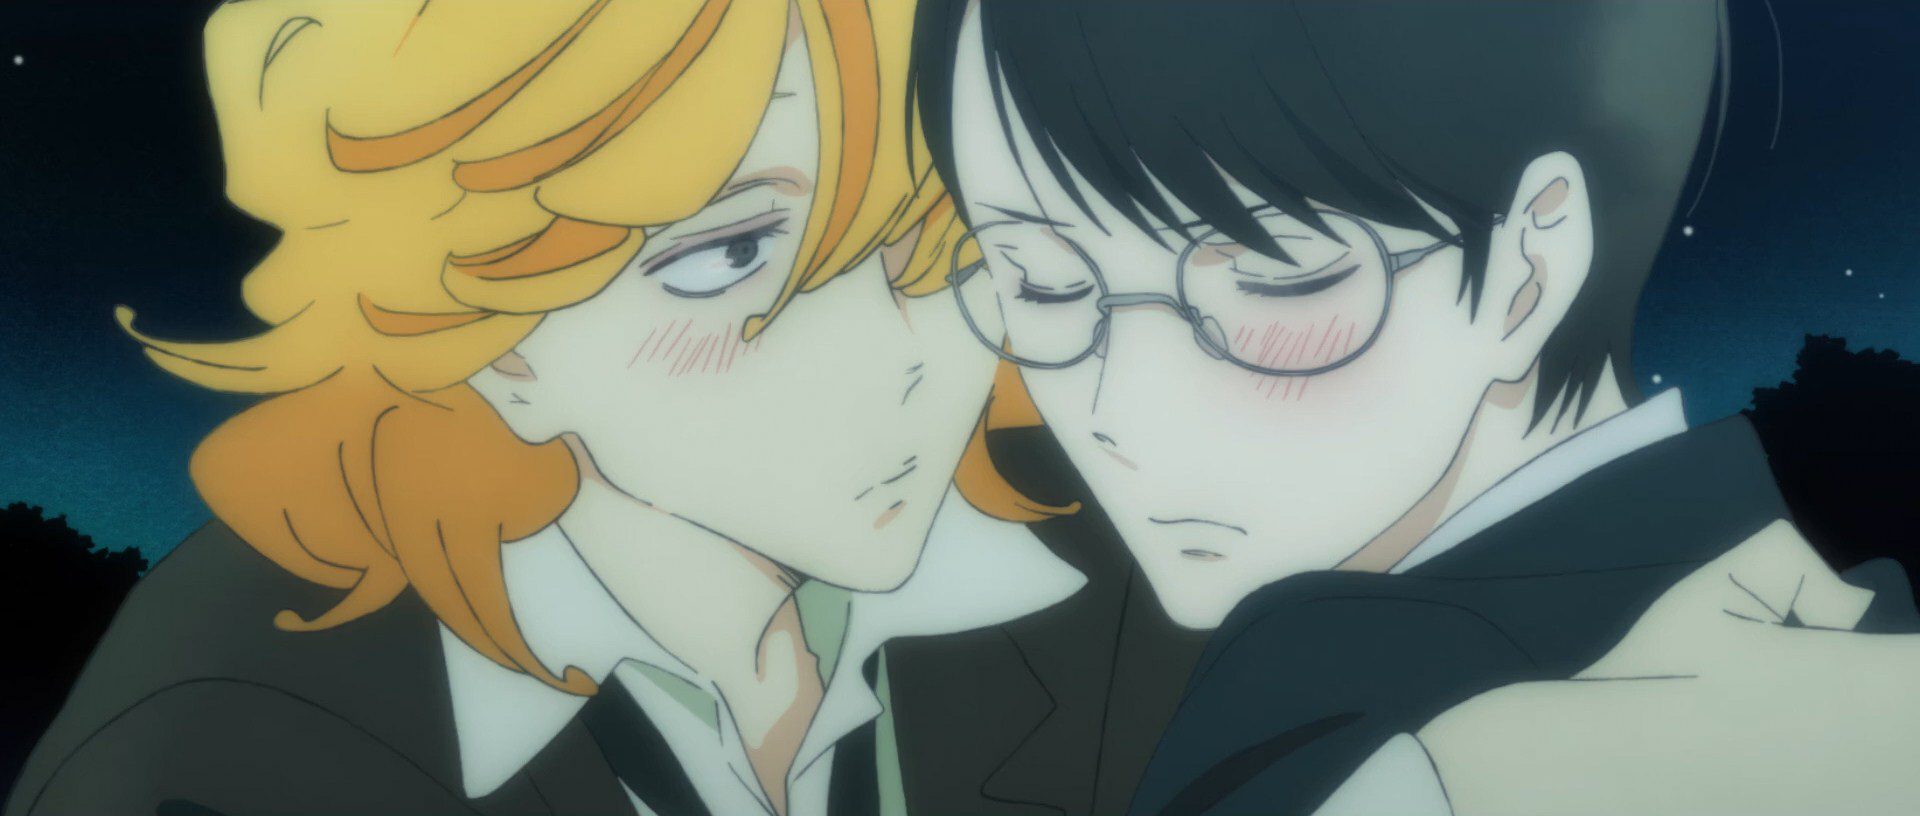 gay anime kiss scene